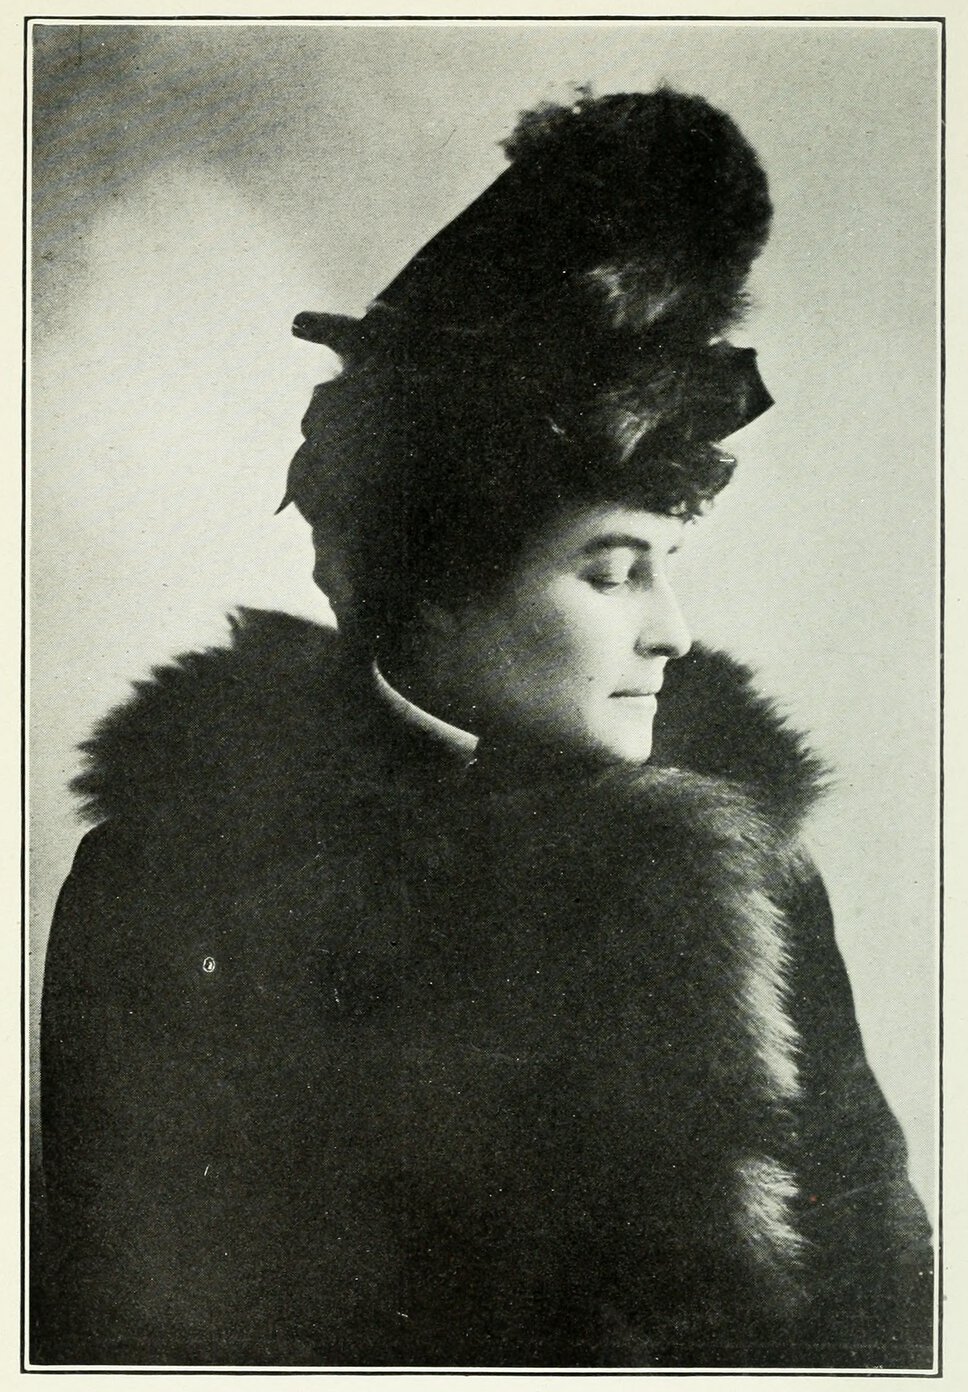 Head and shoulders portrait of E. Pauline Johnson, facing left. Johnson wears a hat and fur coat.